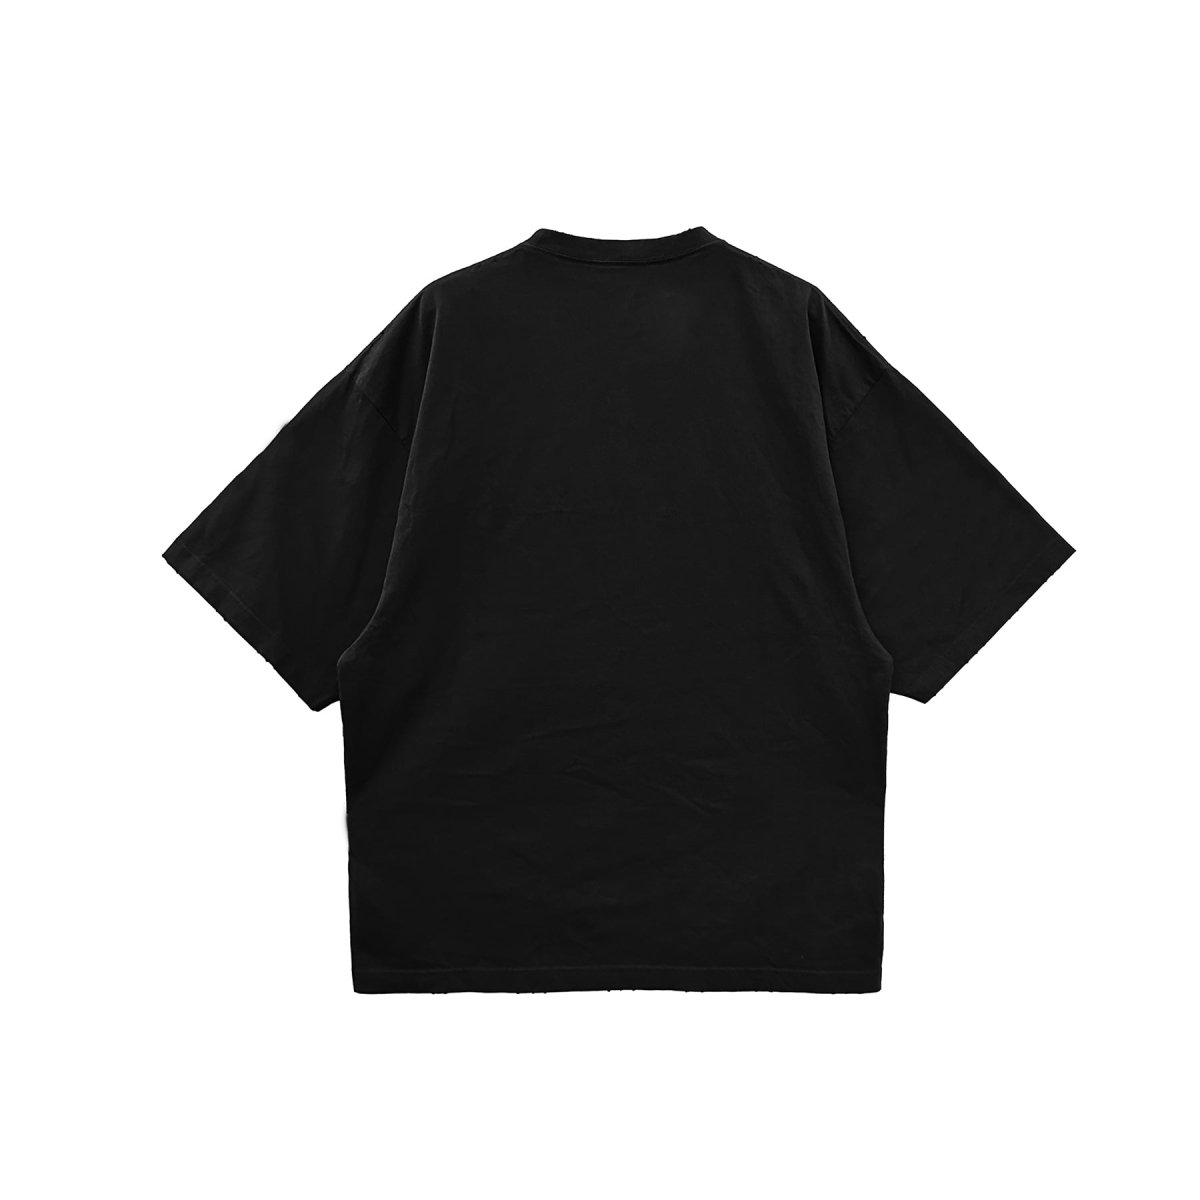 Balenciaga FREE Logo Black Short Sleeve Tee - SHENGLI ROAD MARKET